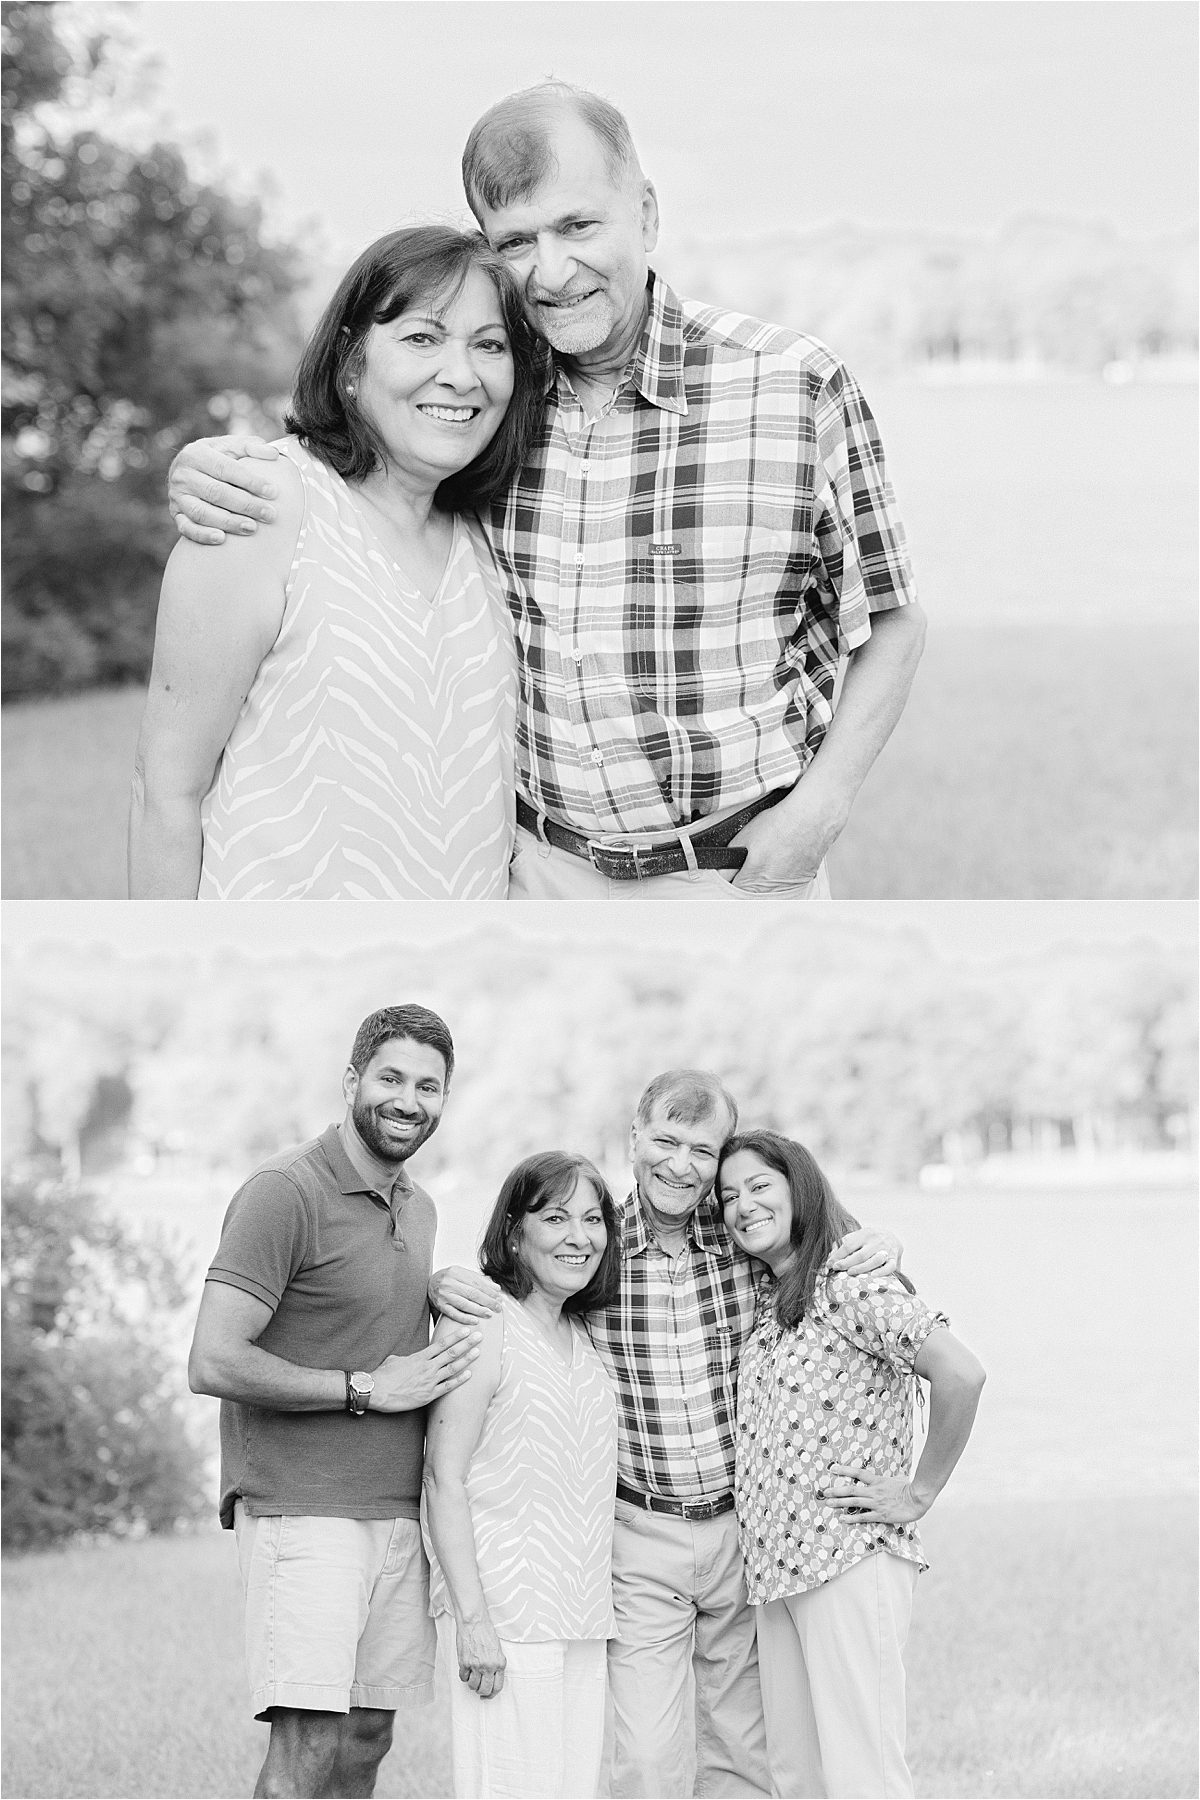 Extended family photography photos at Lake Oconee